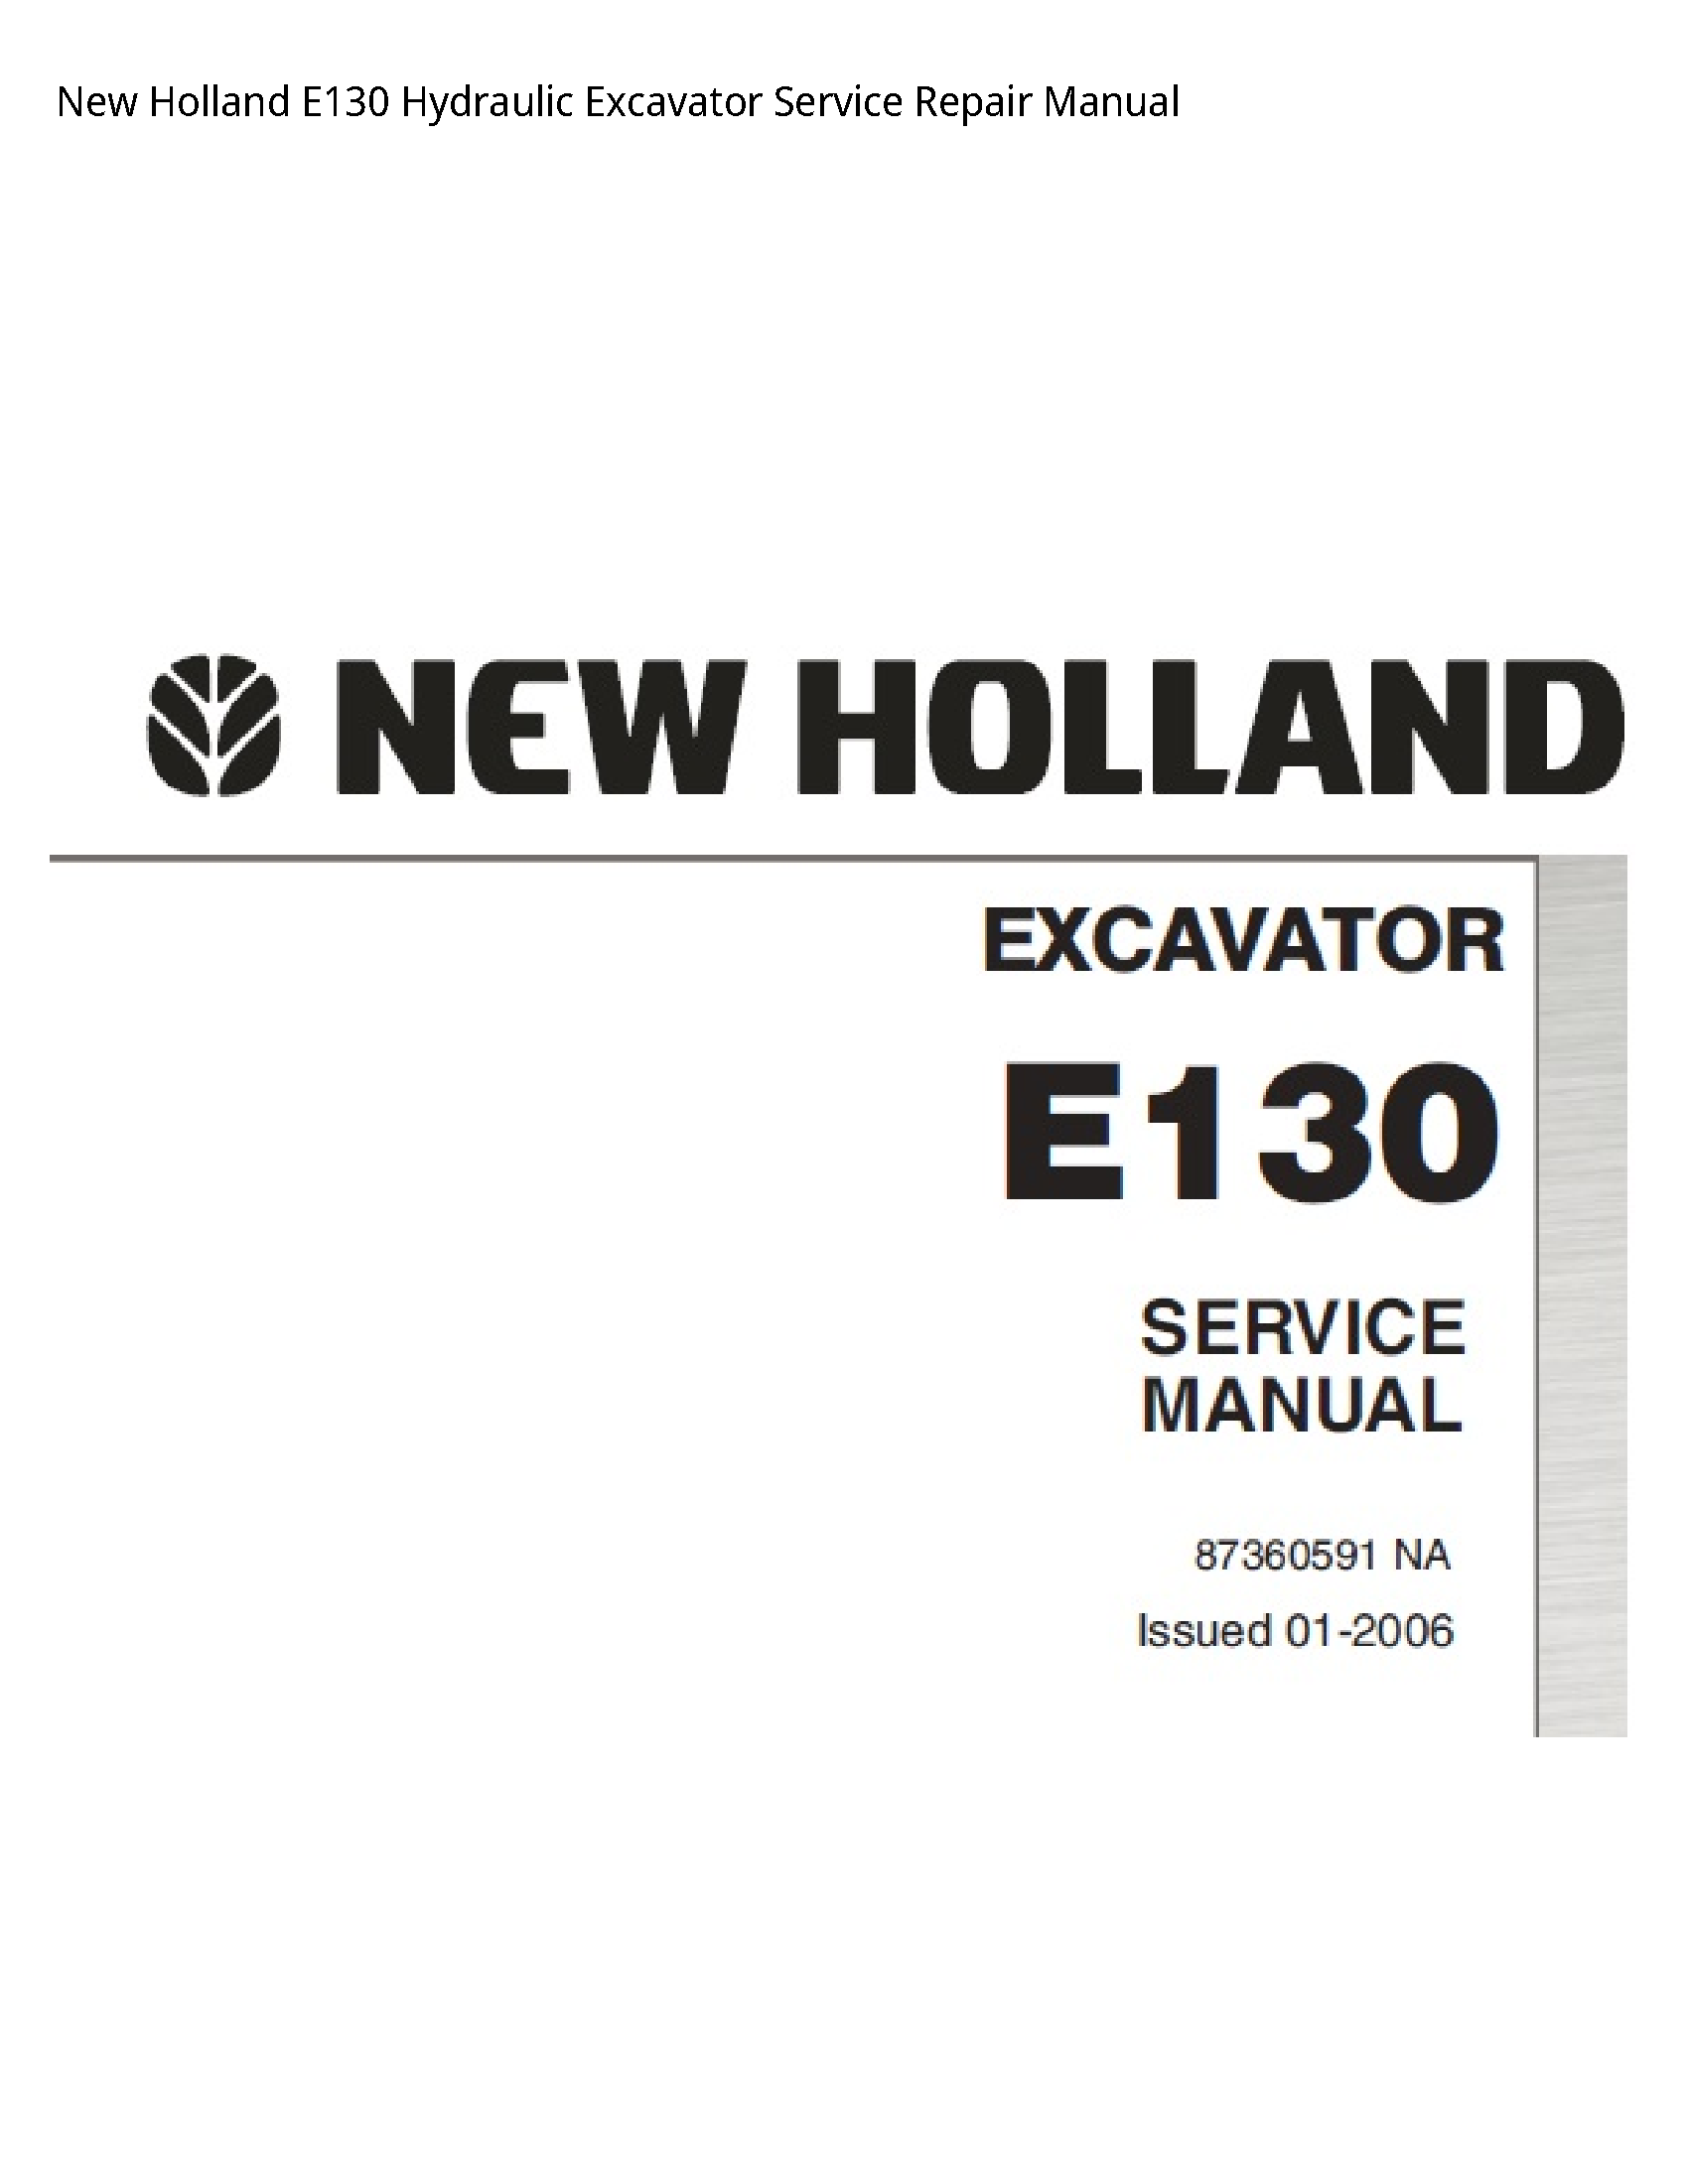 New Holland E130 Hydraulic Excavator manual